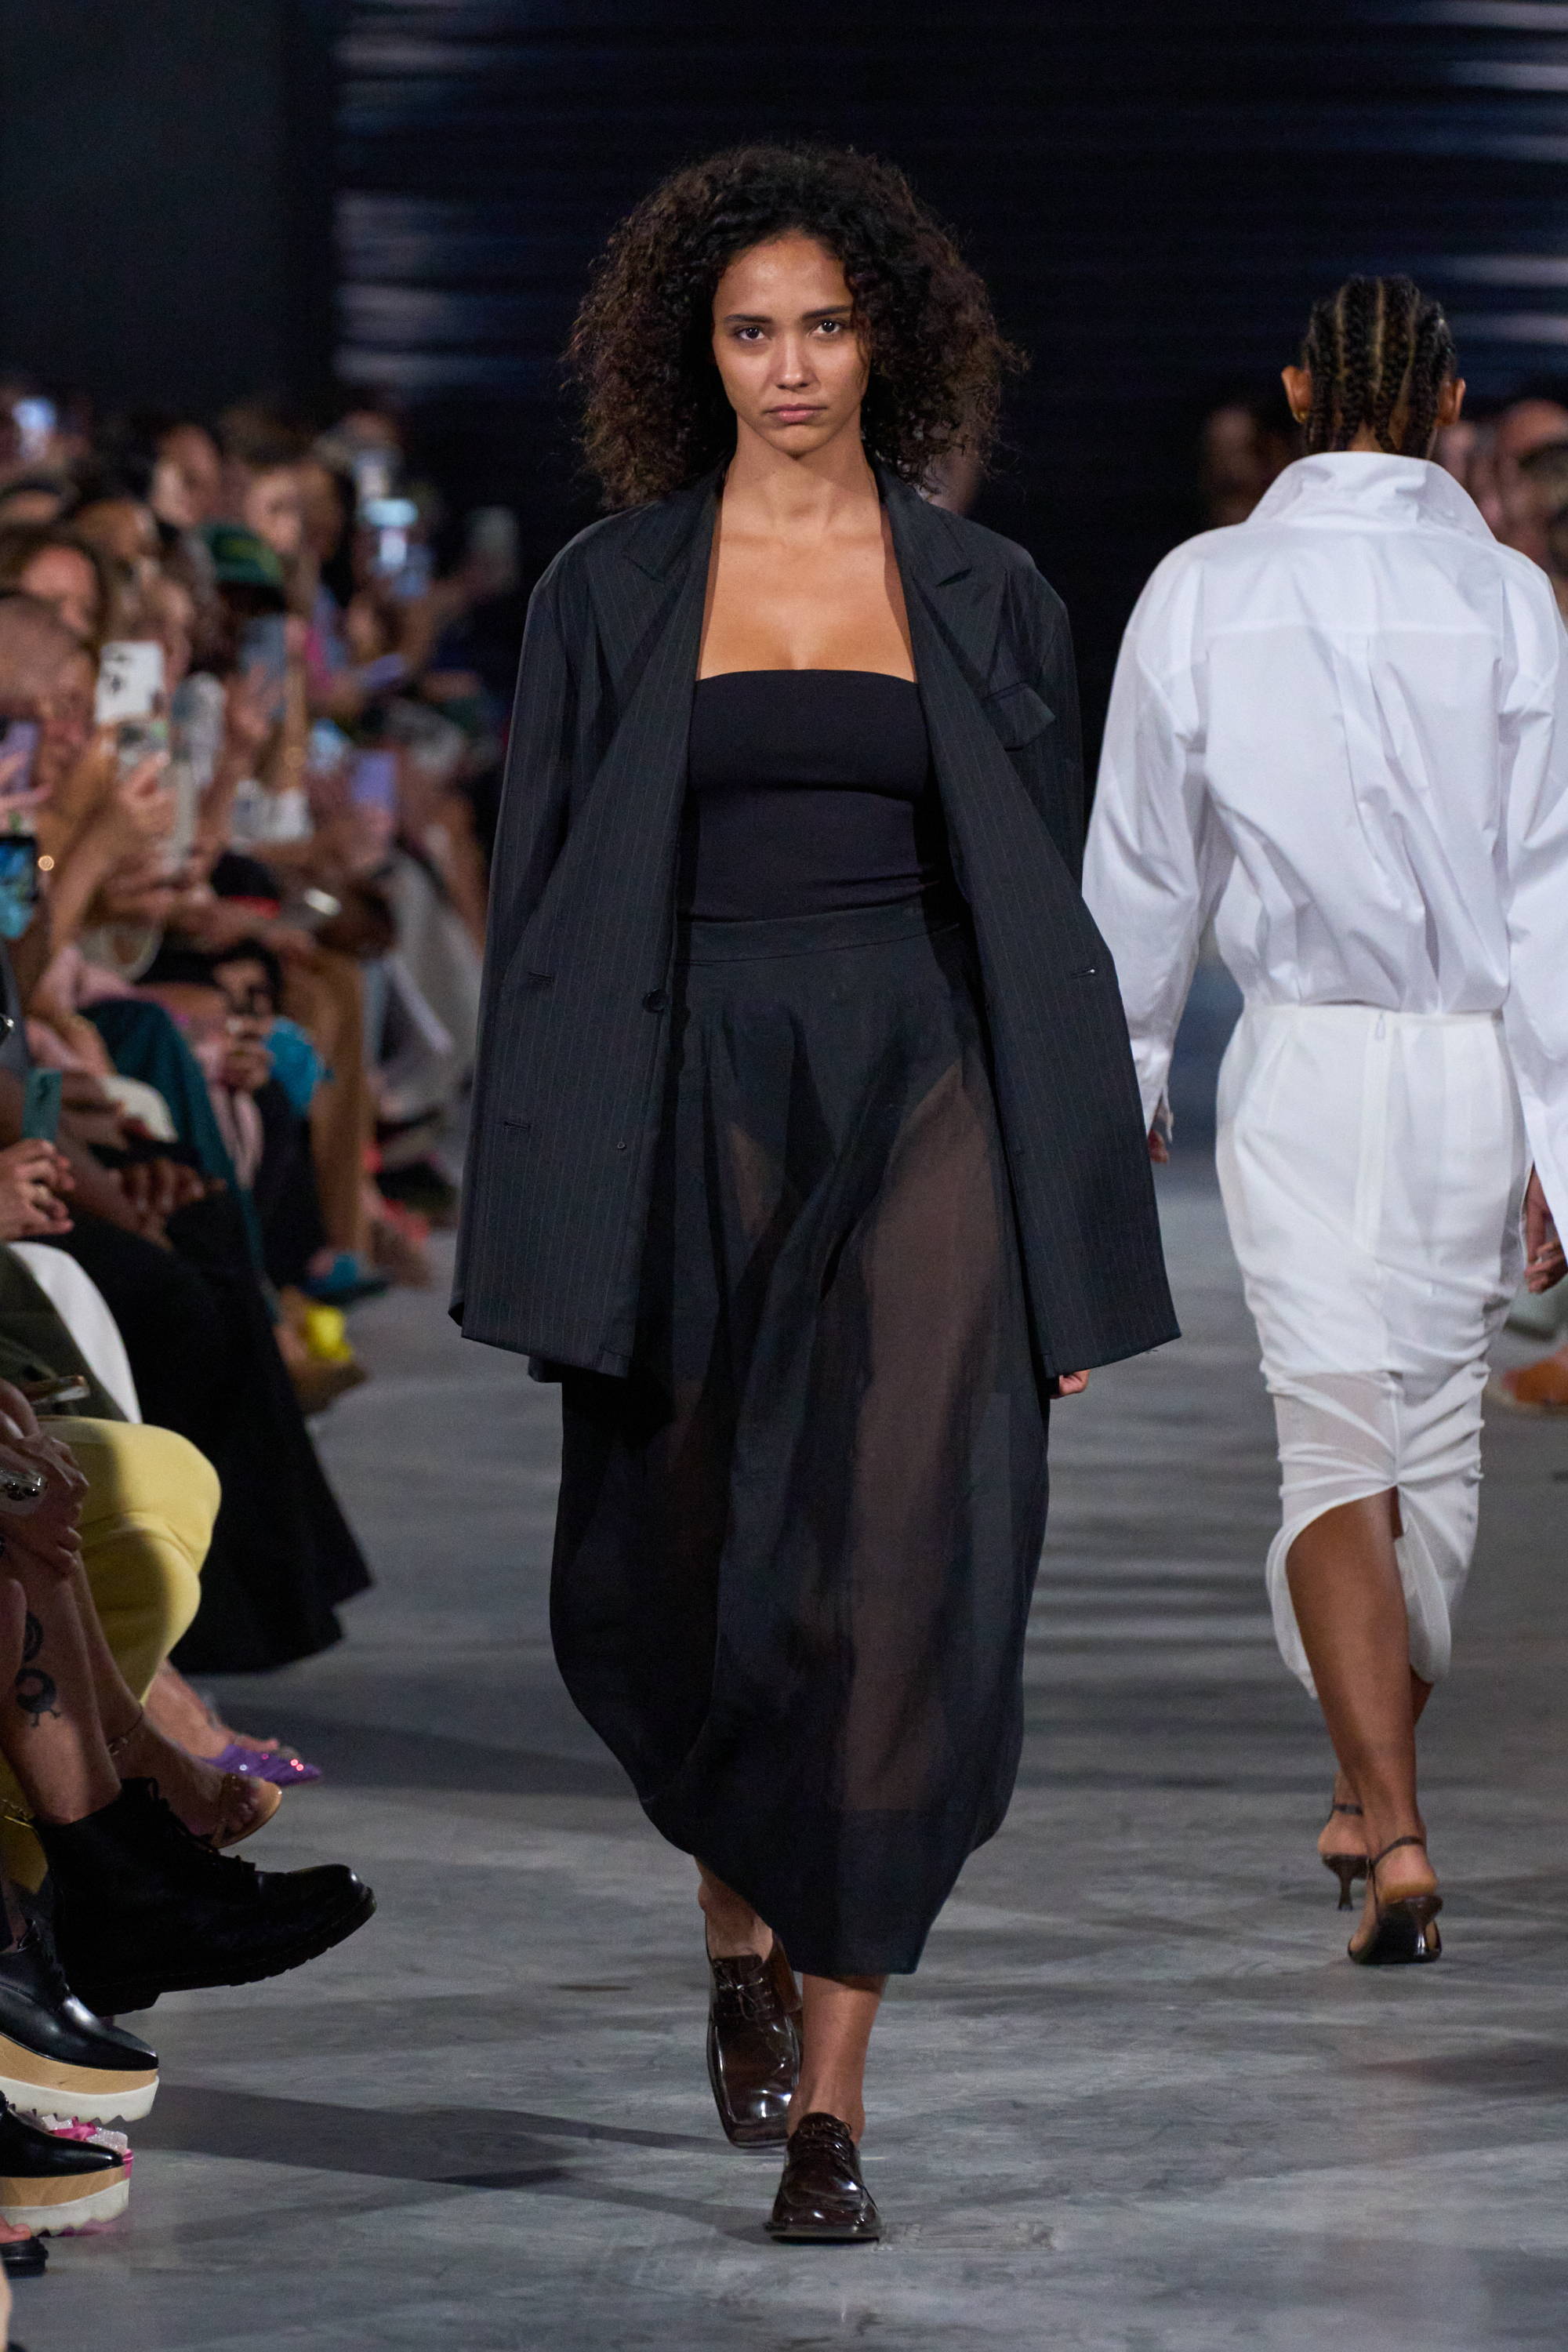 Model on a runway wearing blazer over skirt